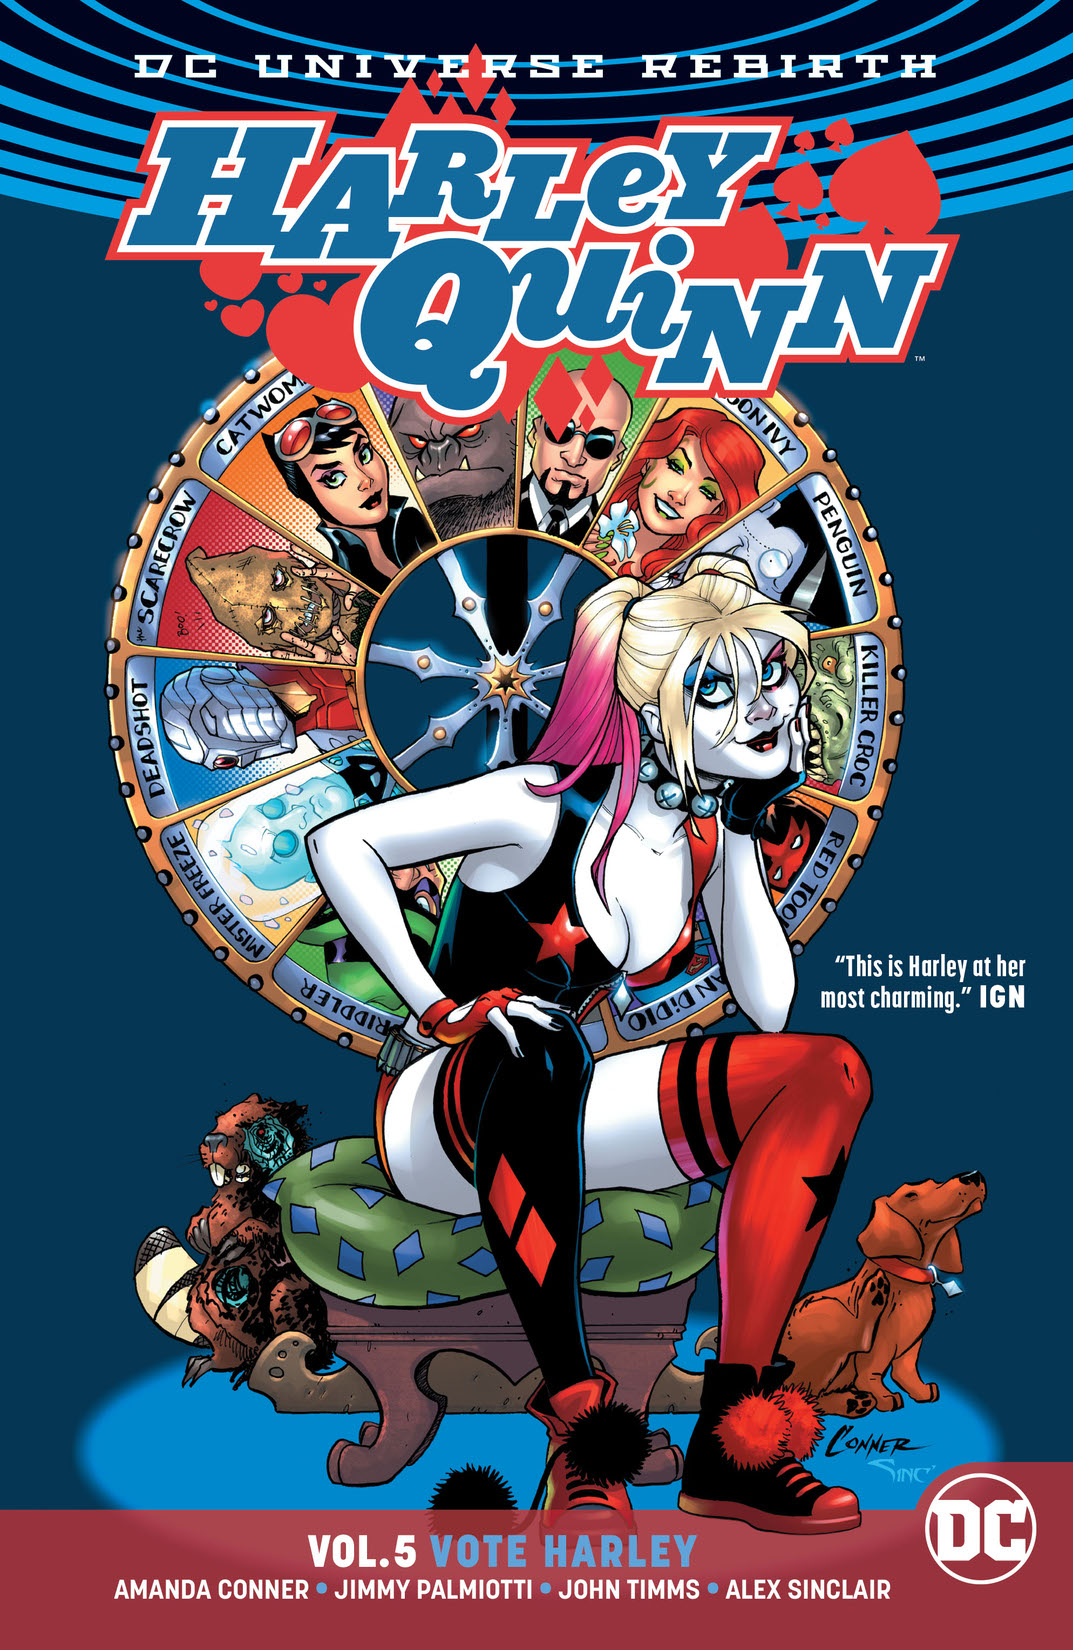 Harley Quinn Vol. 5: Vote Harley  preview images